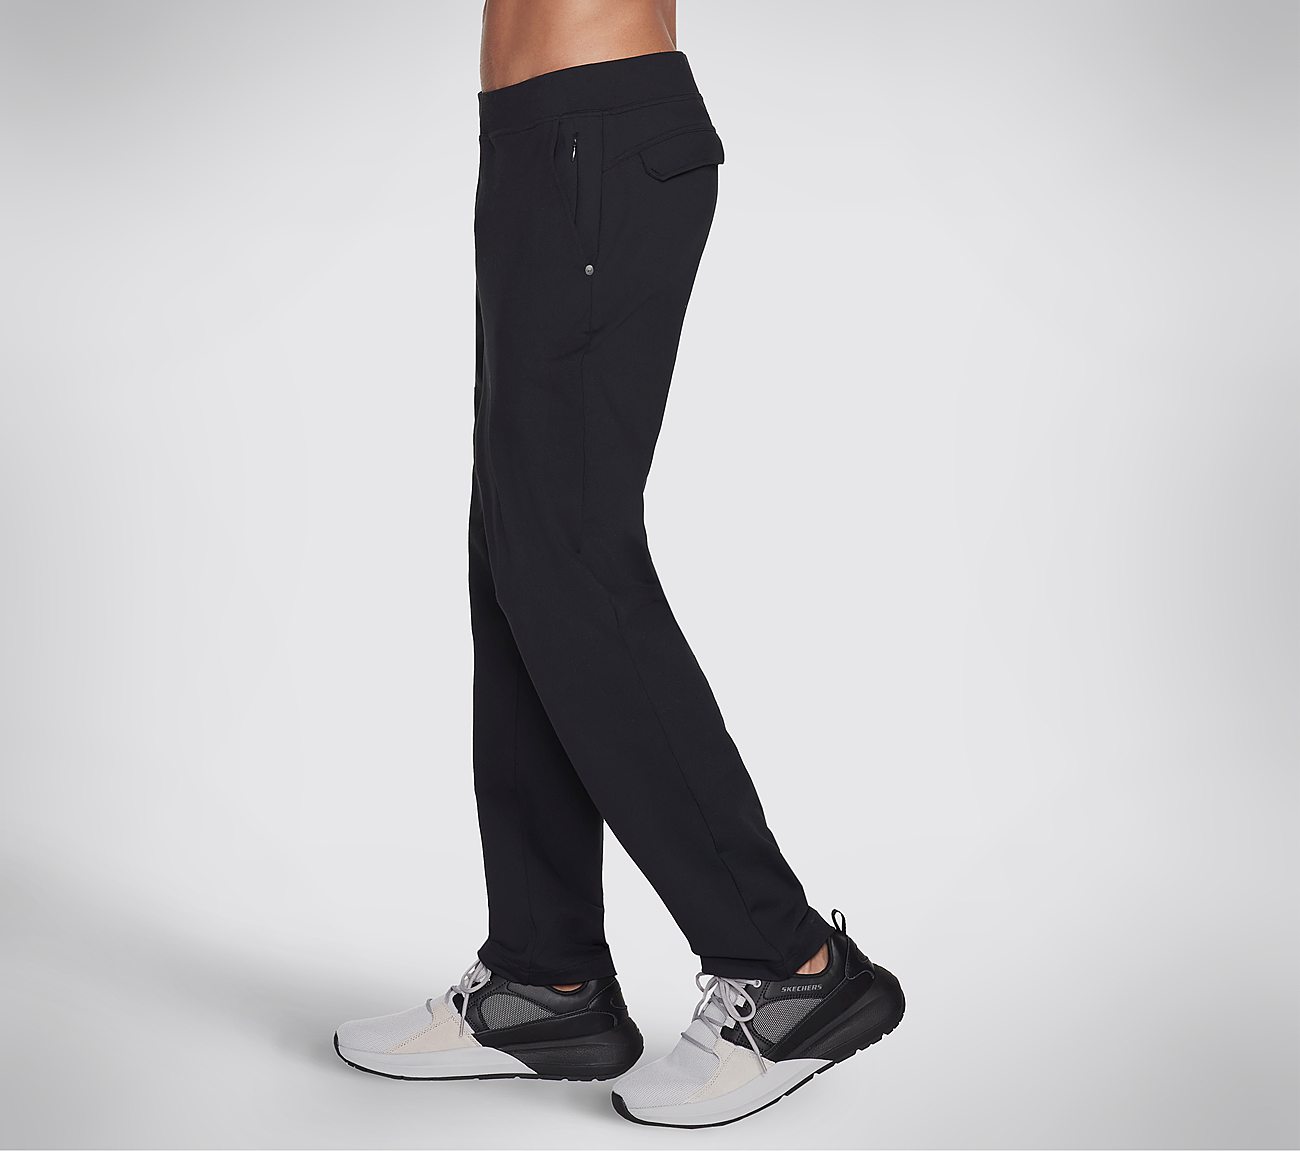 Skechers The Go Walk Pant Recharge - Black Pants For Men